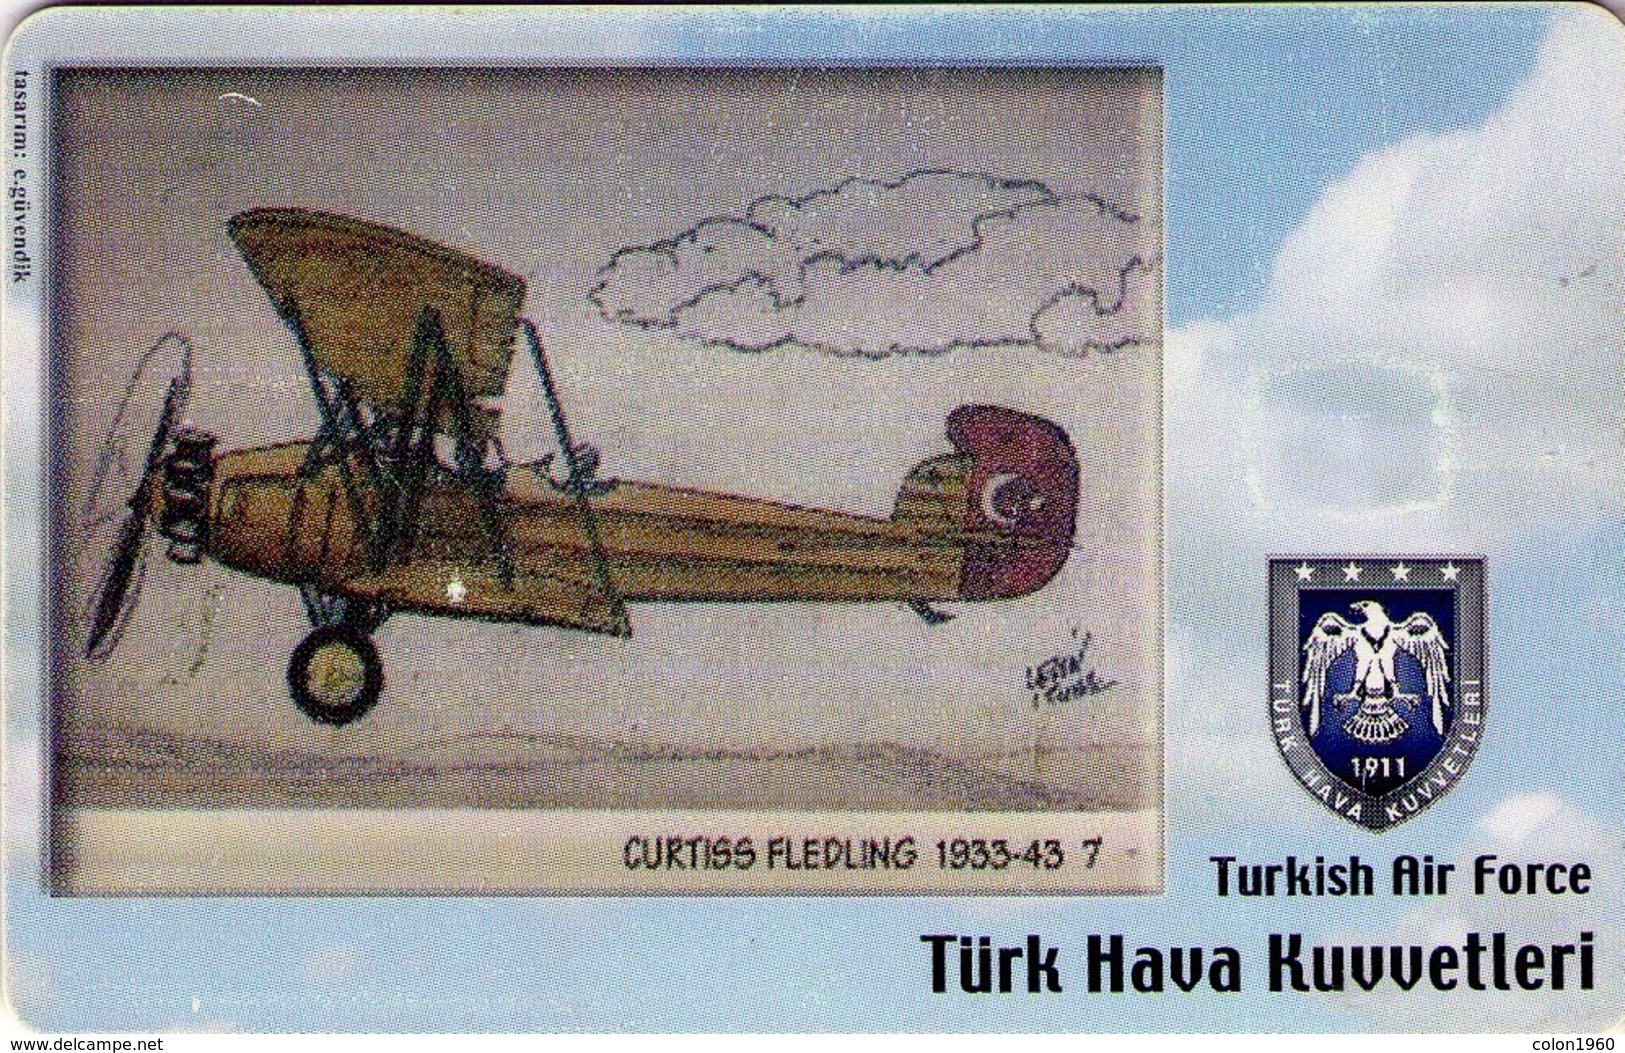 TURQUIA. AVION. (CHIP) TURKISH AIR FORCE, CURTISS FLEDLING 1933-43, TR-TT-C-0113. (136) - Aviones